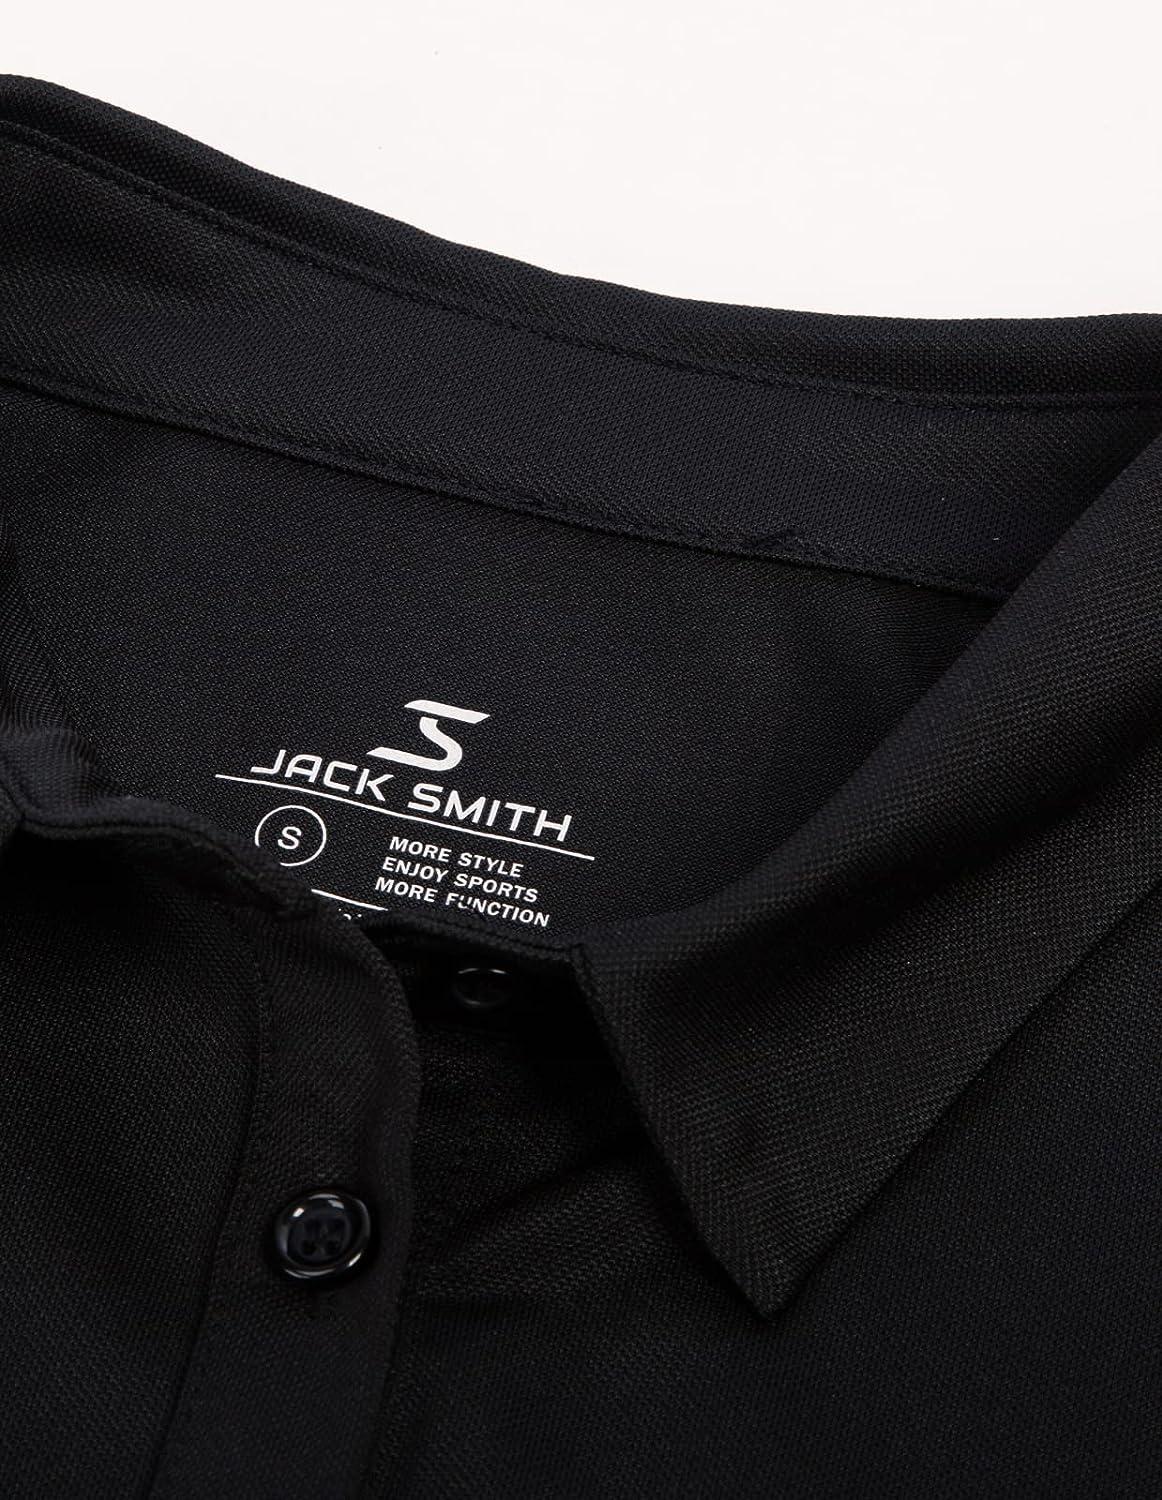 JACK SMITH Women's Sleeveless Polo Shirts Quick Dry Golf Tennis